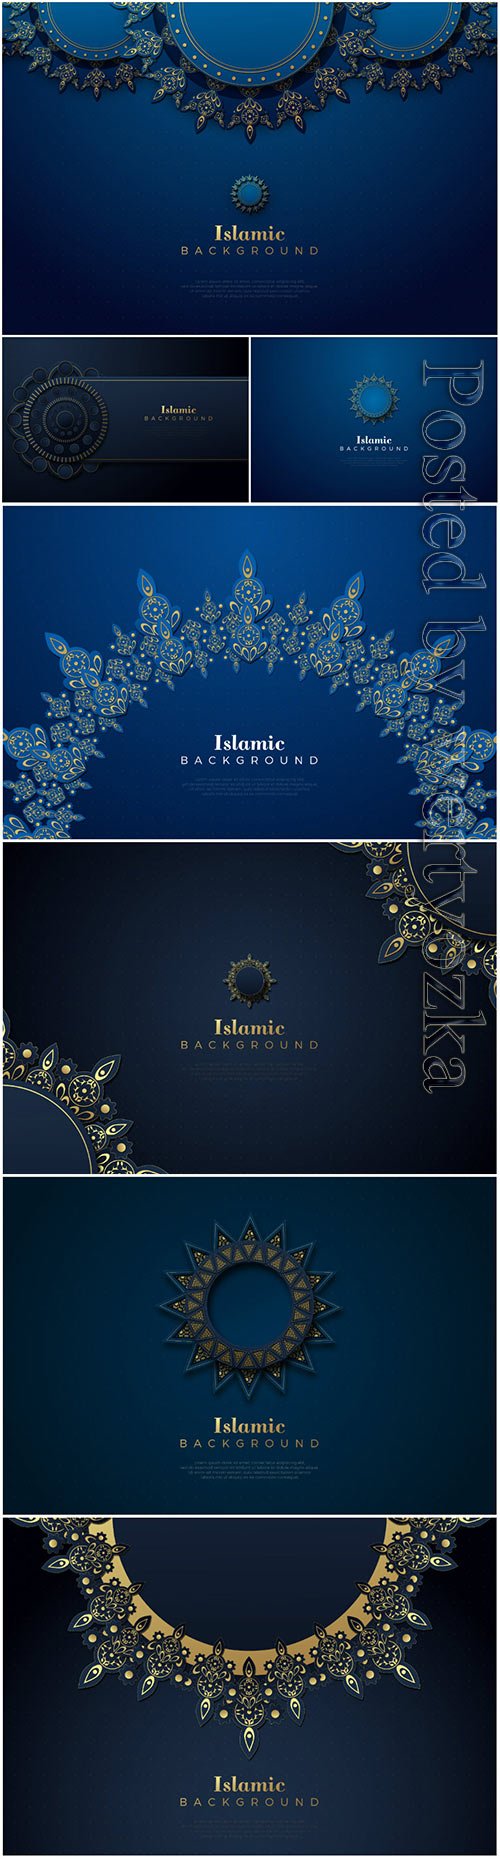 Islamic background with elegant gold circle ornament